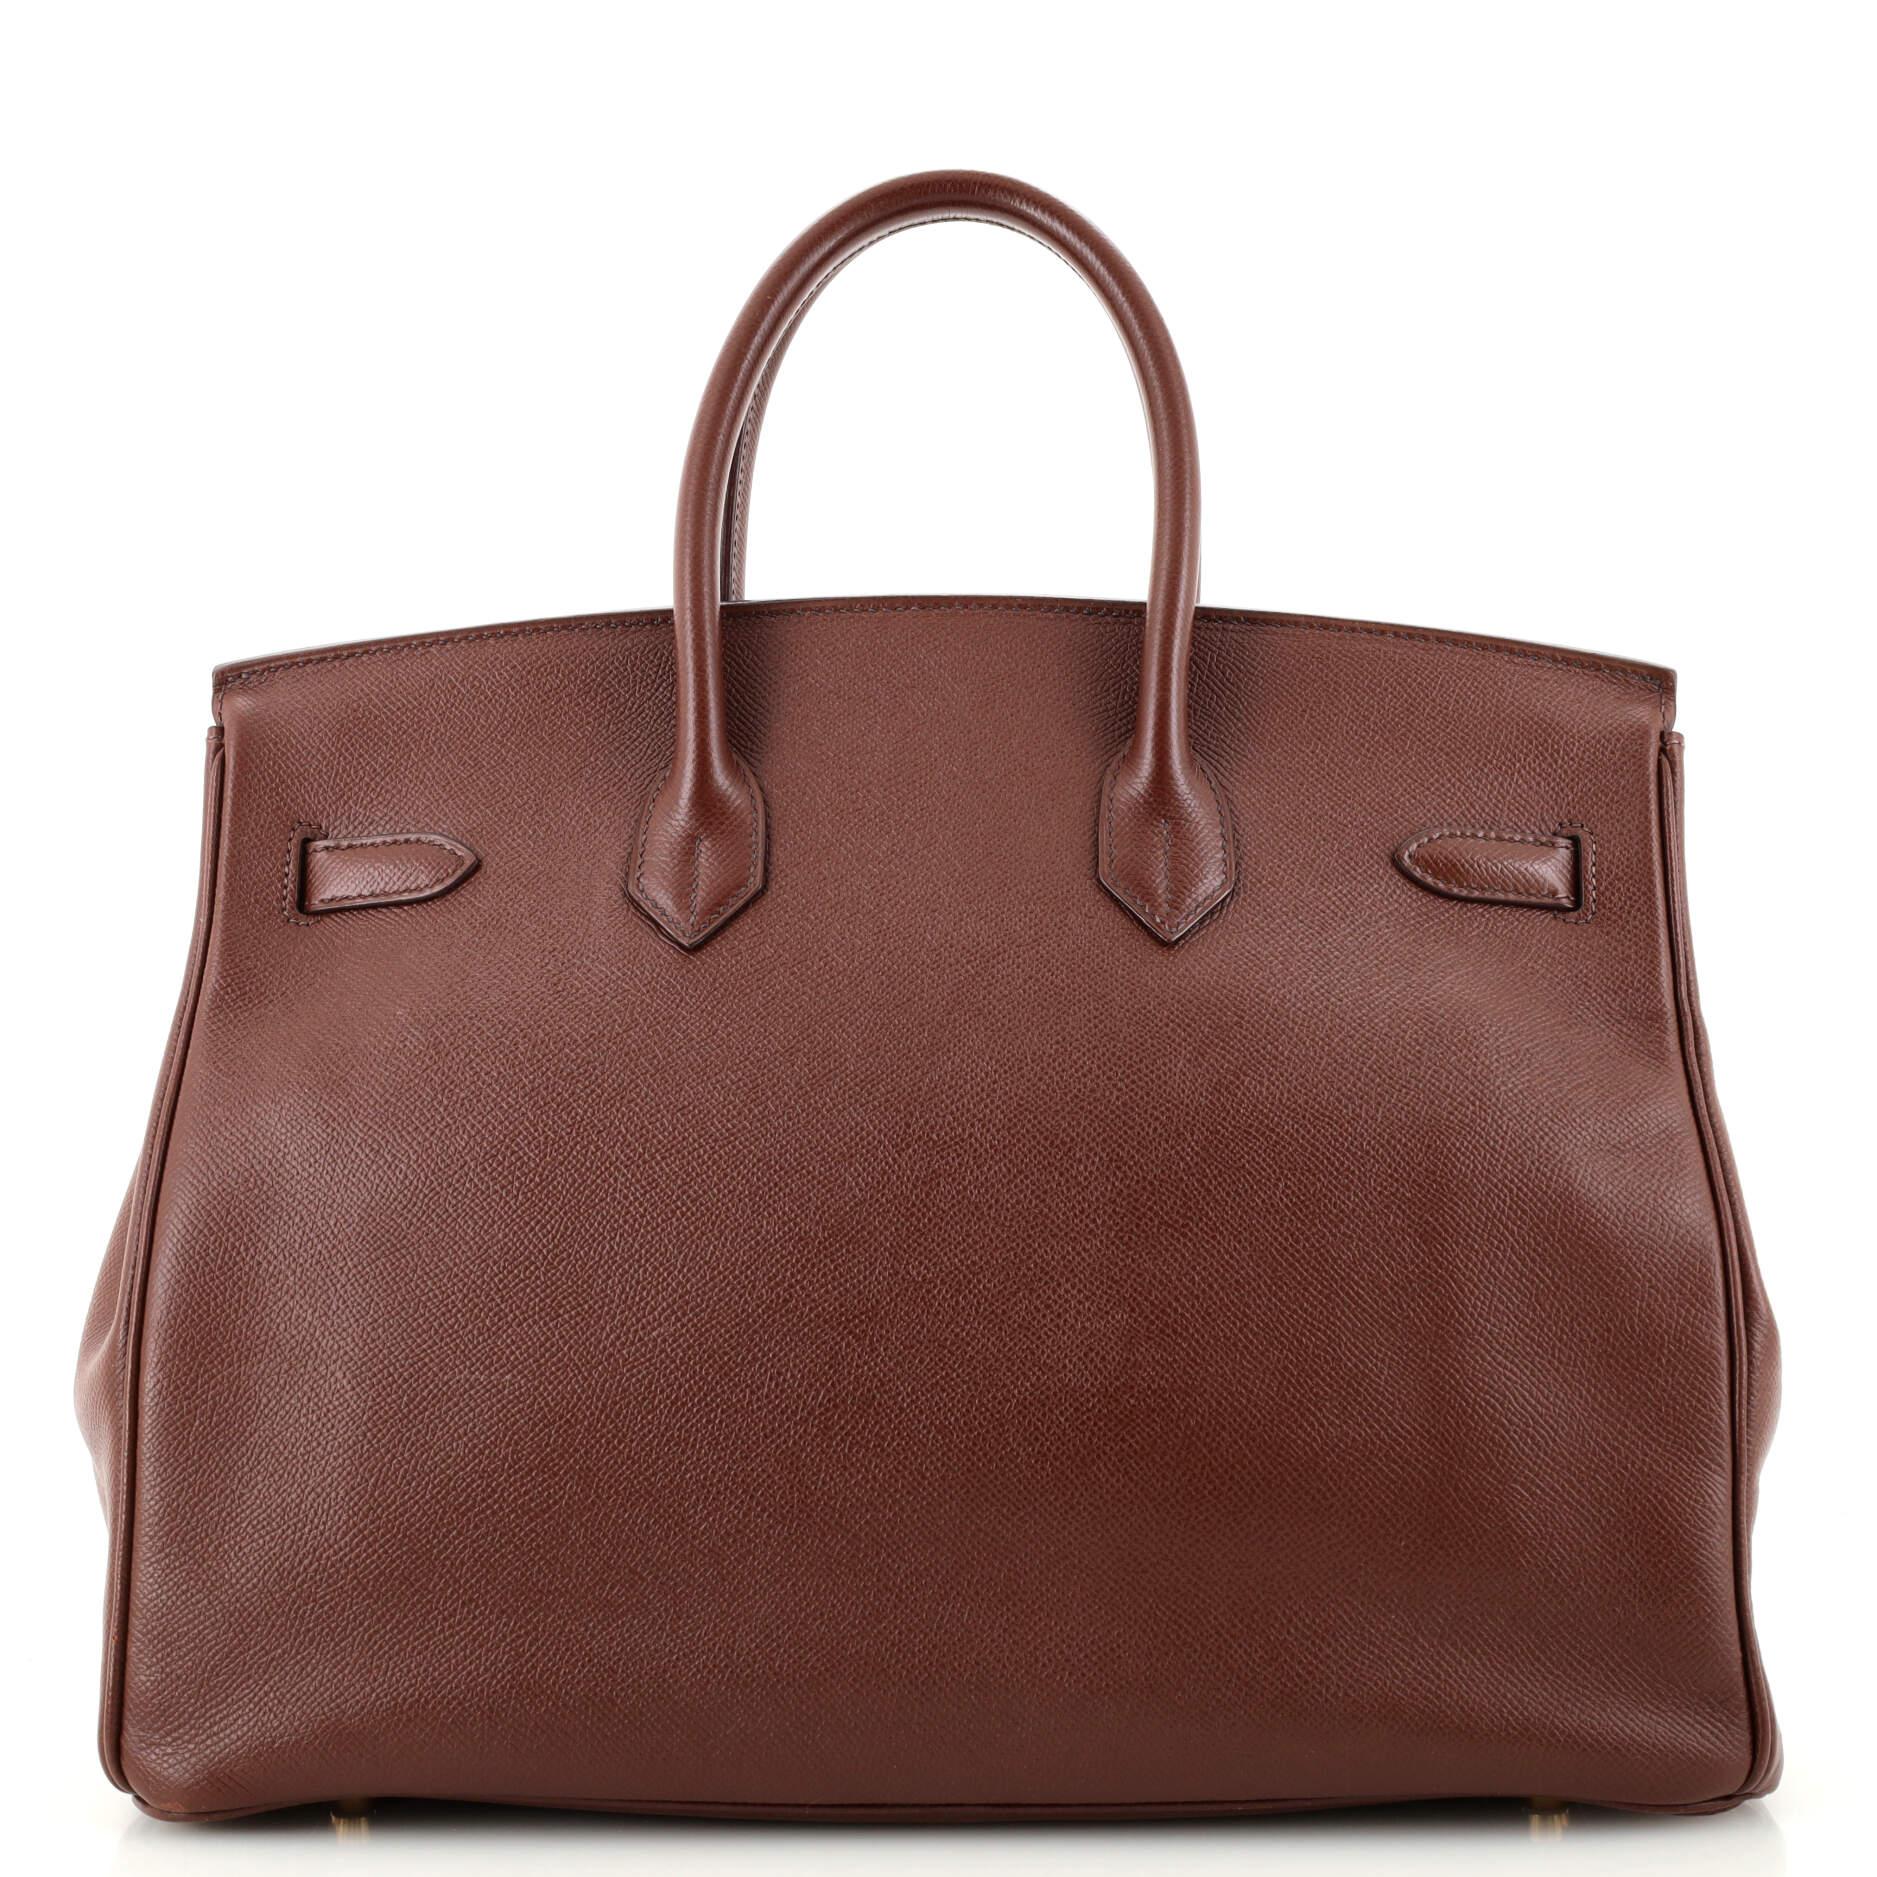 Women's or Men's Hermes Birkin Handbag Marron Foncé Courchevel with Gold Hardware 35